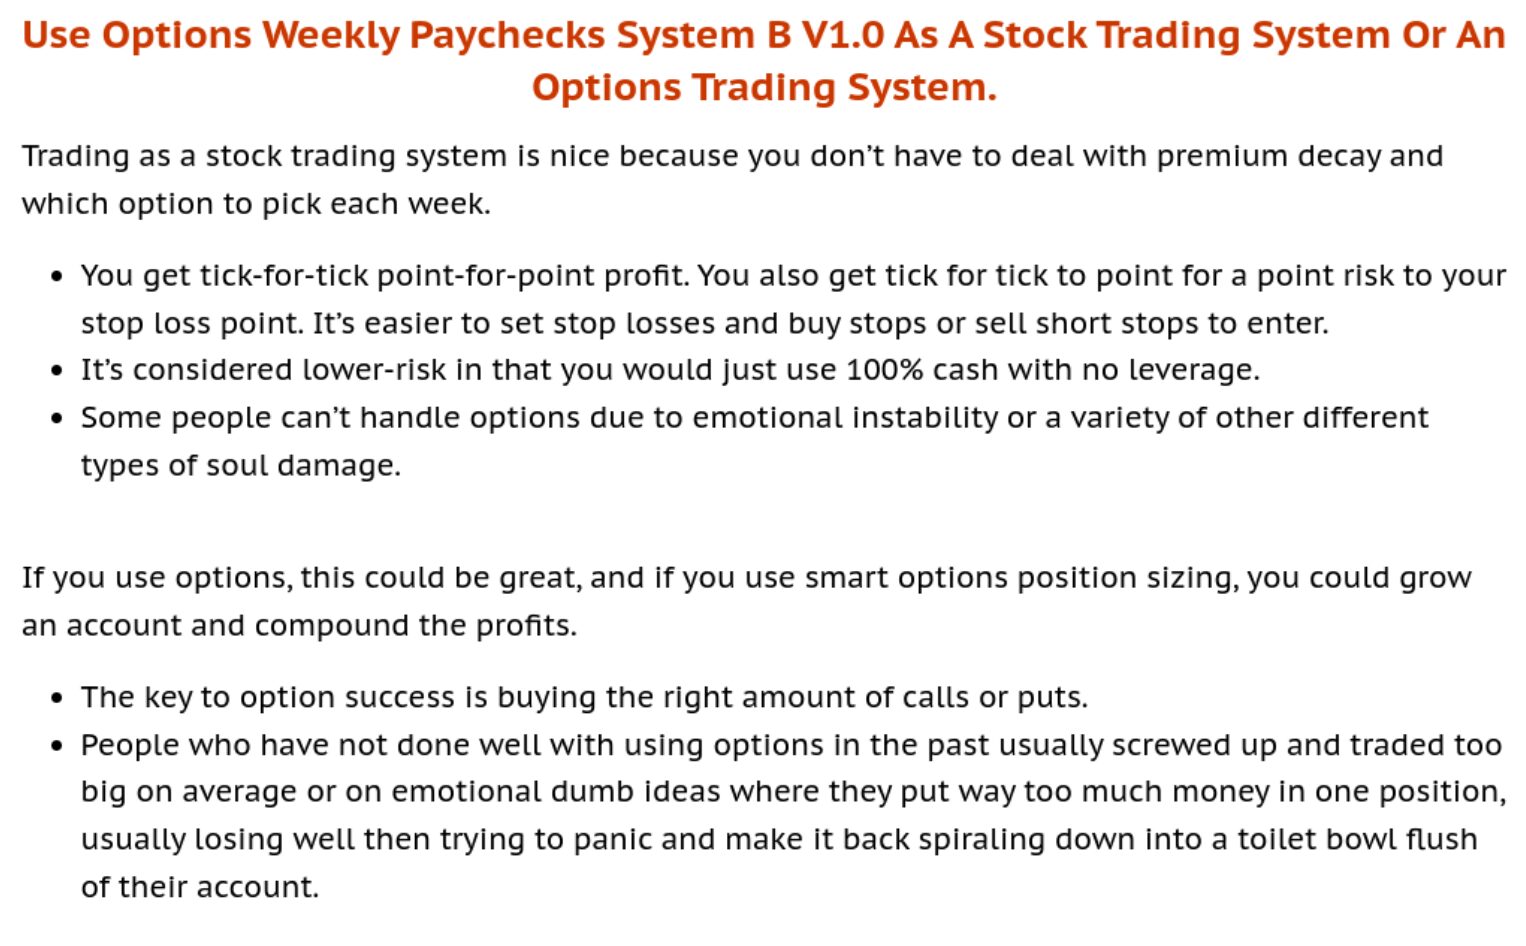 Options Weekly Paychecks Systems B V1.0 - The Original Simple Powerhouse 7